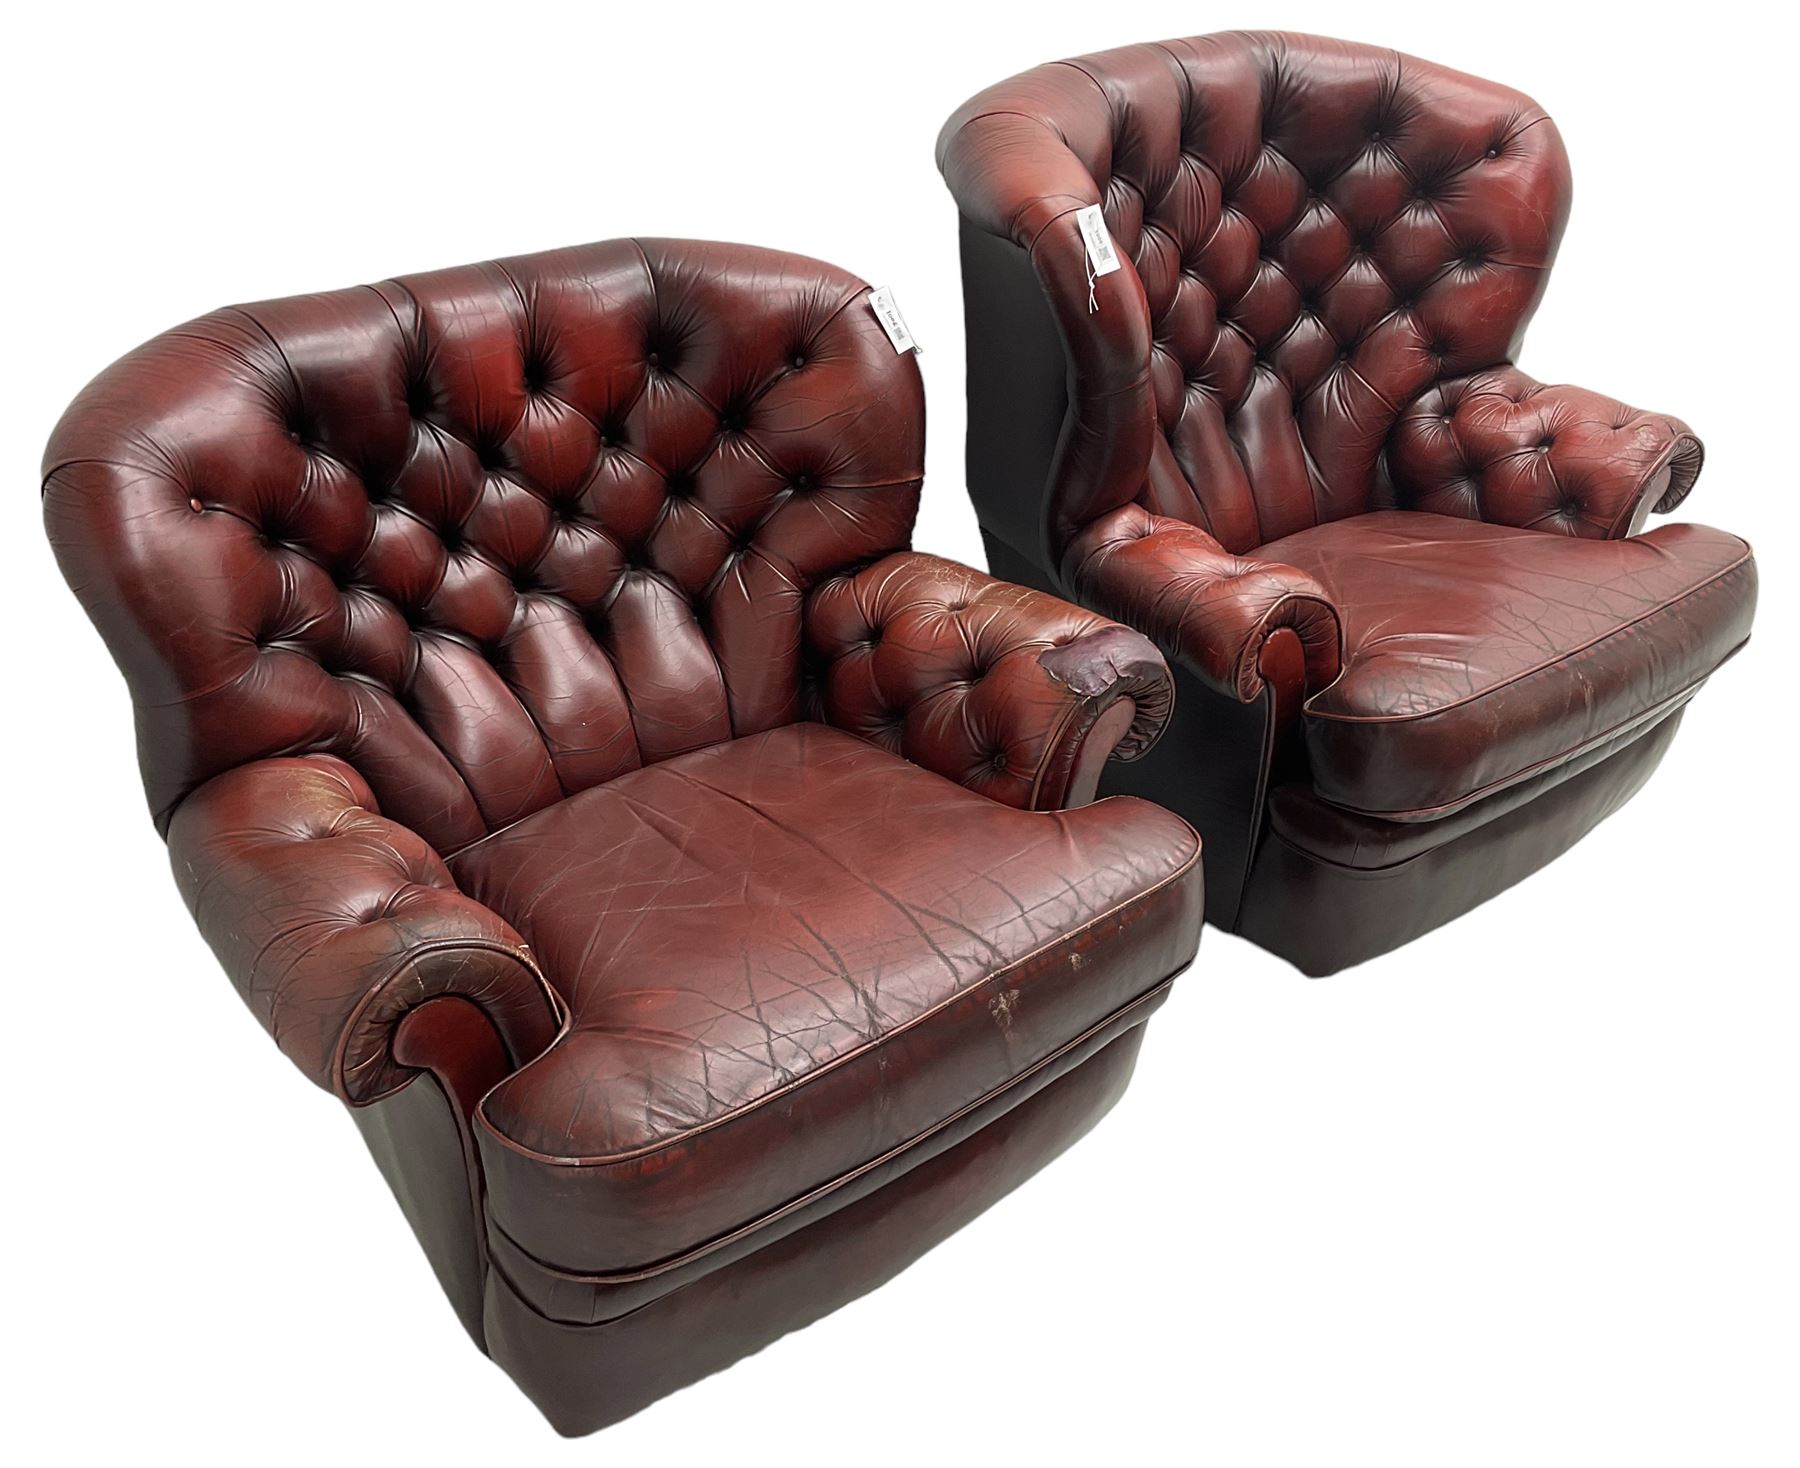 Wade - pair of Georgian design armchairs - Image 4 of 14